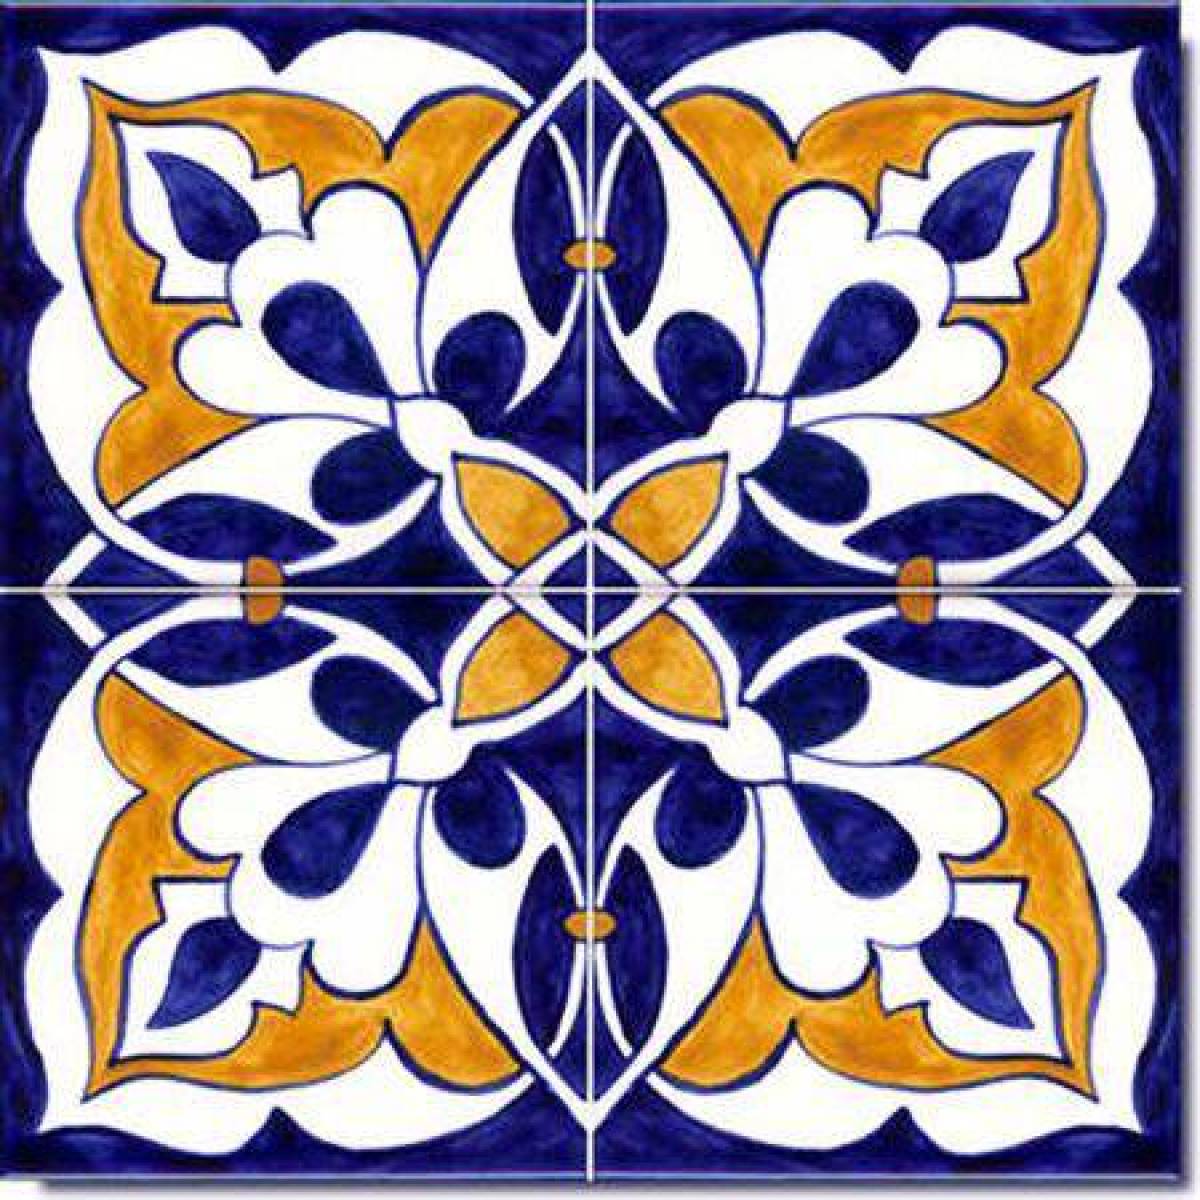 Delightful ceramic tile coloring page